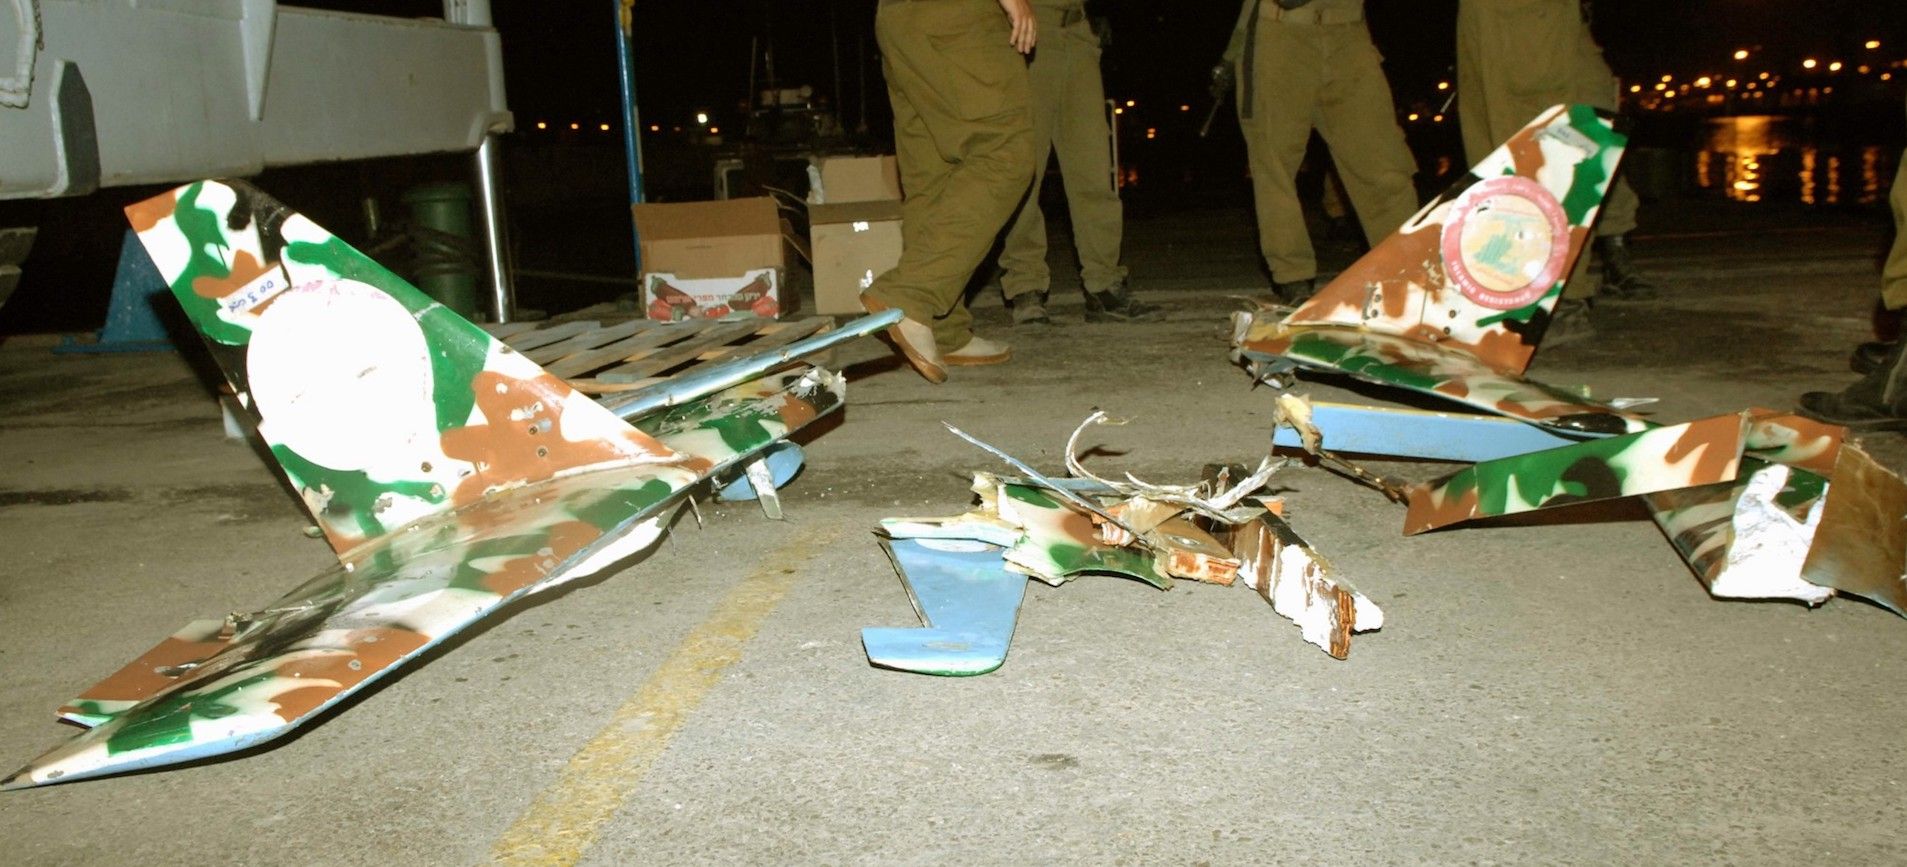 IAF Intercepts UAV in Israeli Airspace